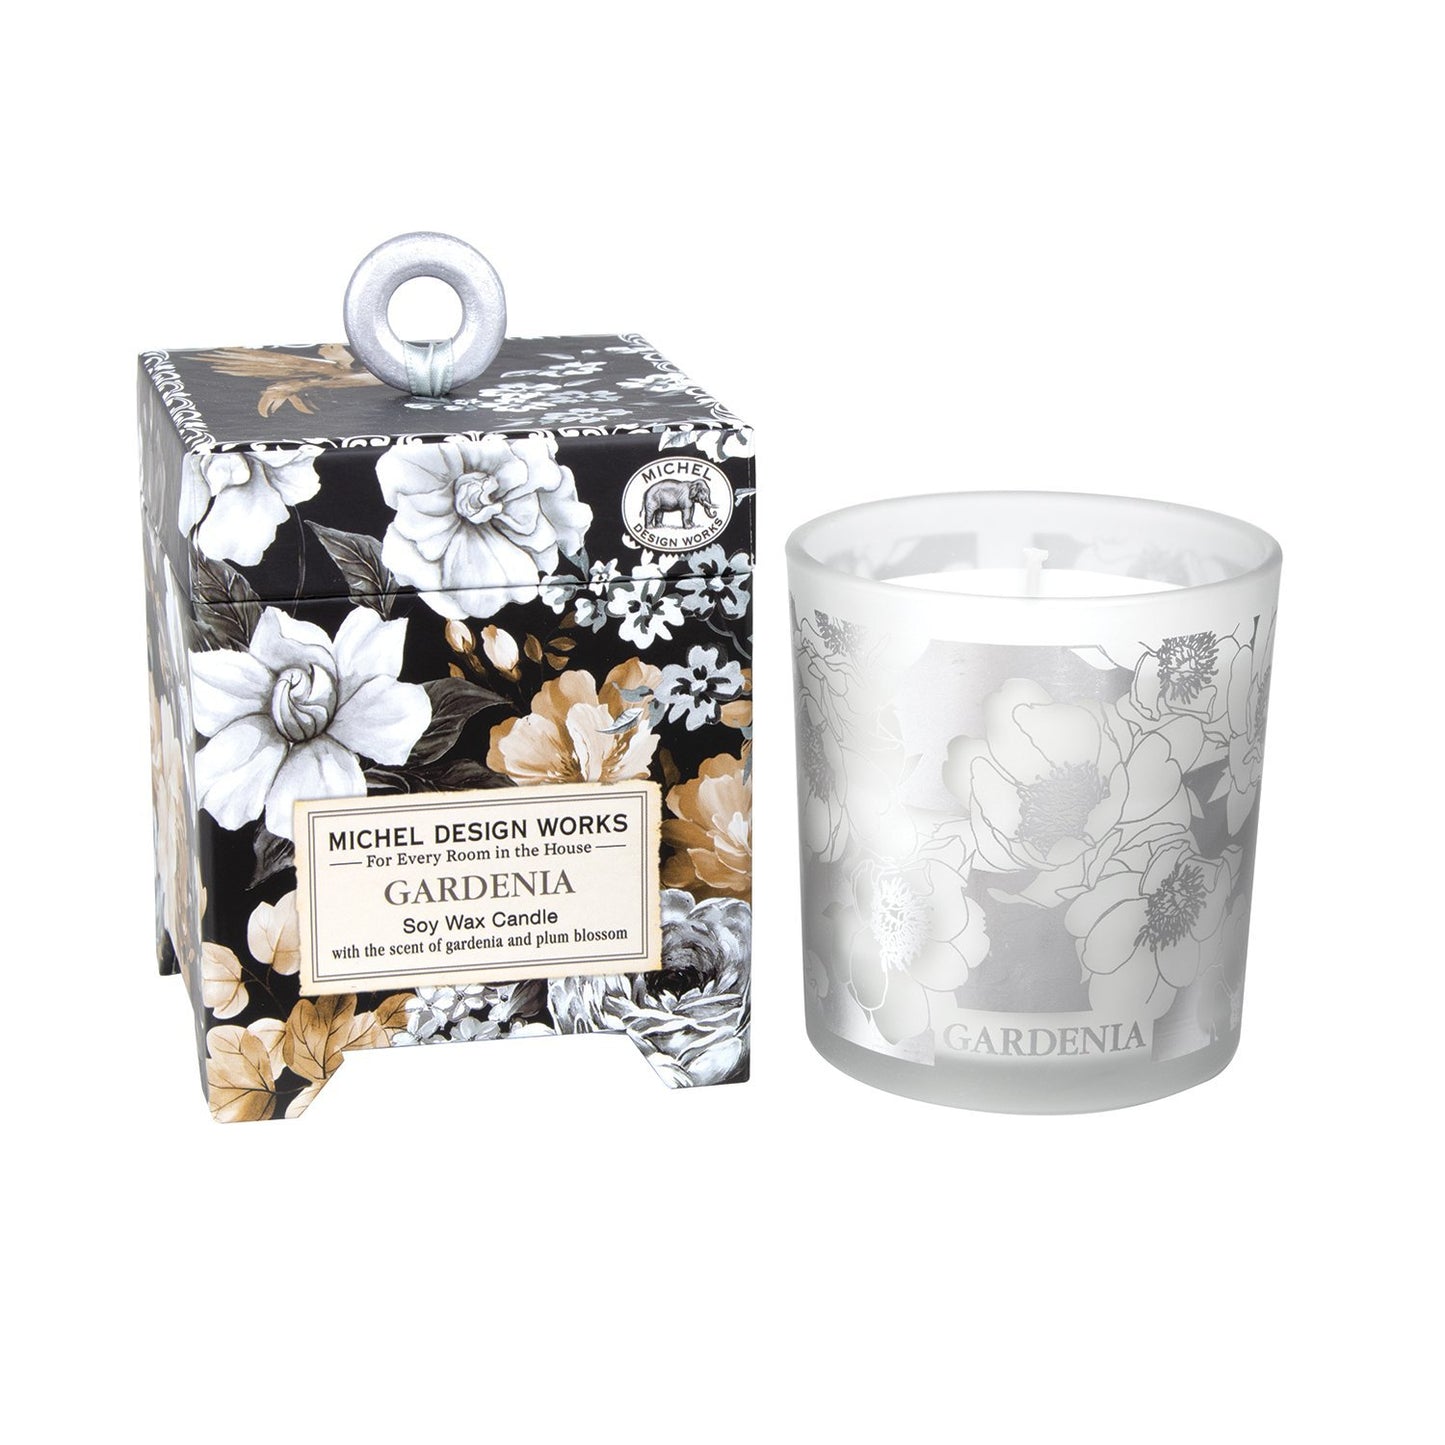 Gardenia 6.5 oz. Soy Wax Candle Floral Elegance with Gardenia and Plum Blossom